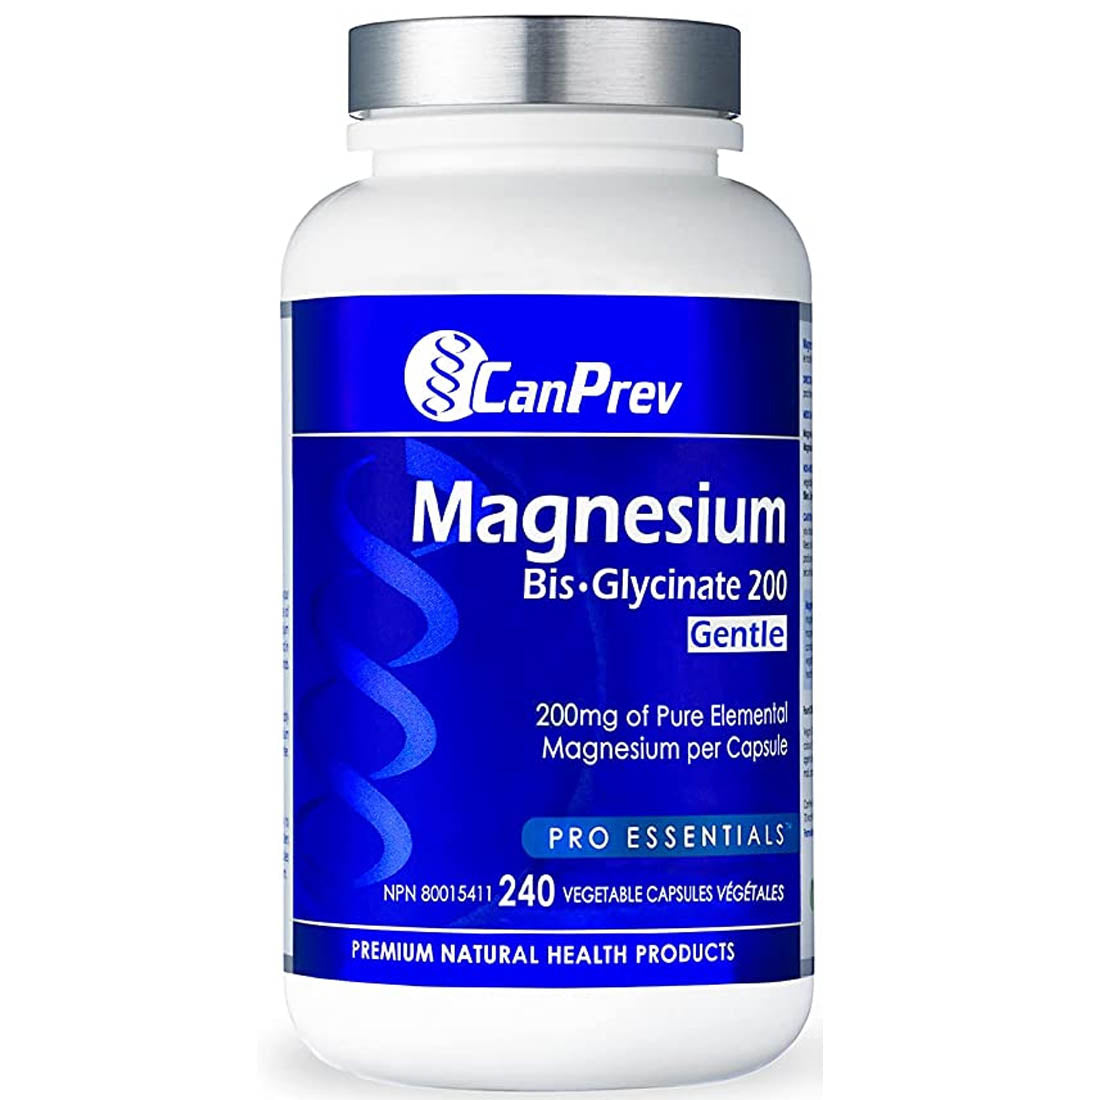 CanPrev Magnesium Bisglycinate 200 Gentle